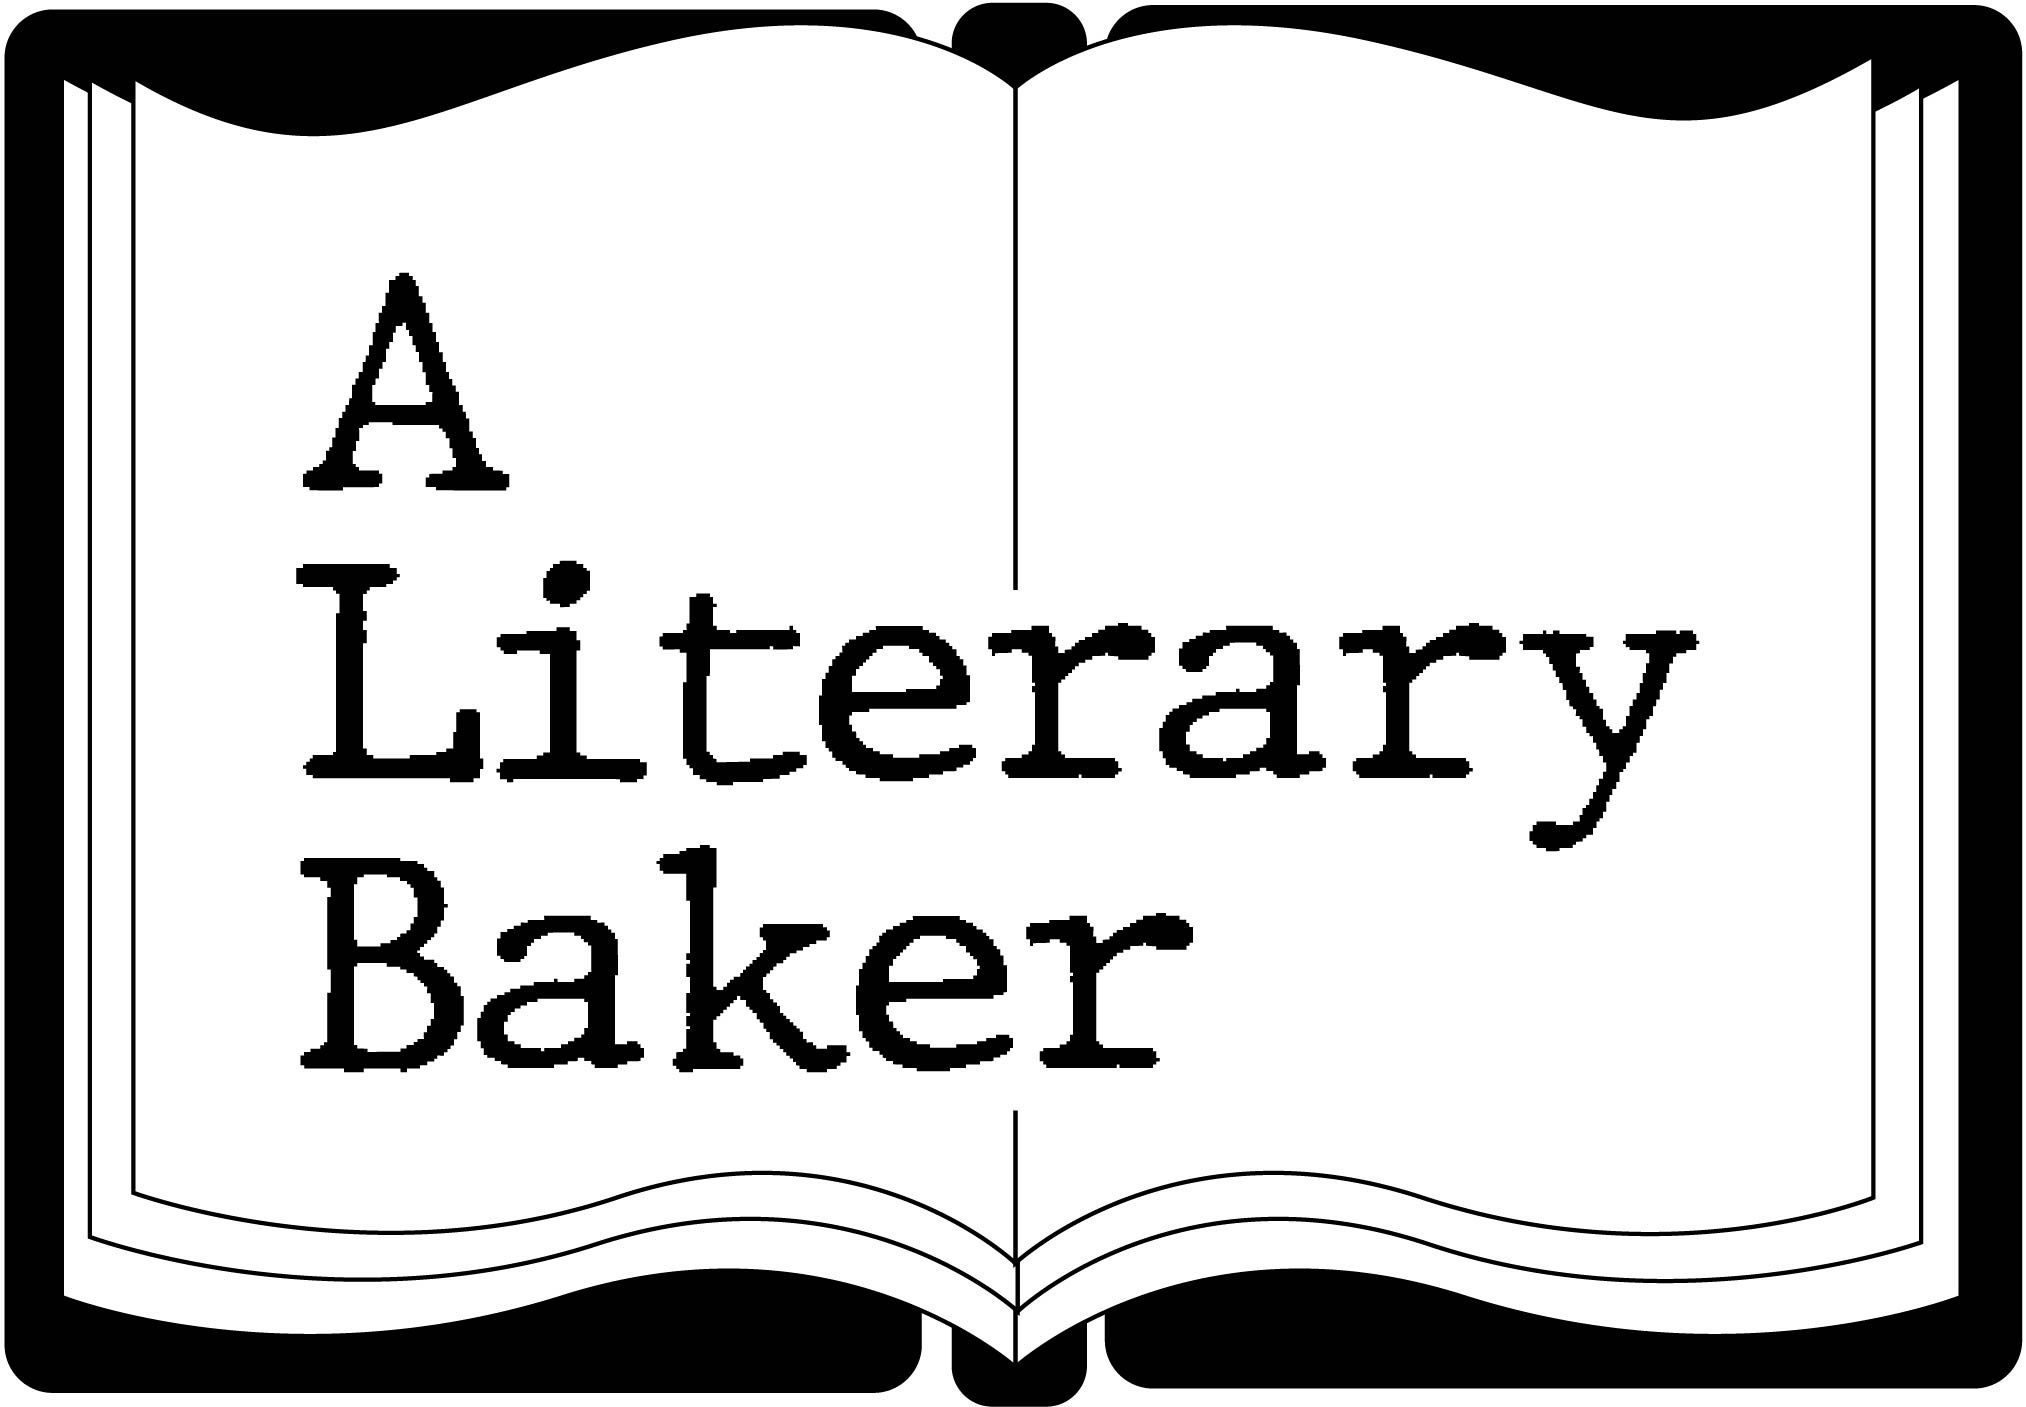 Literary Baker